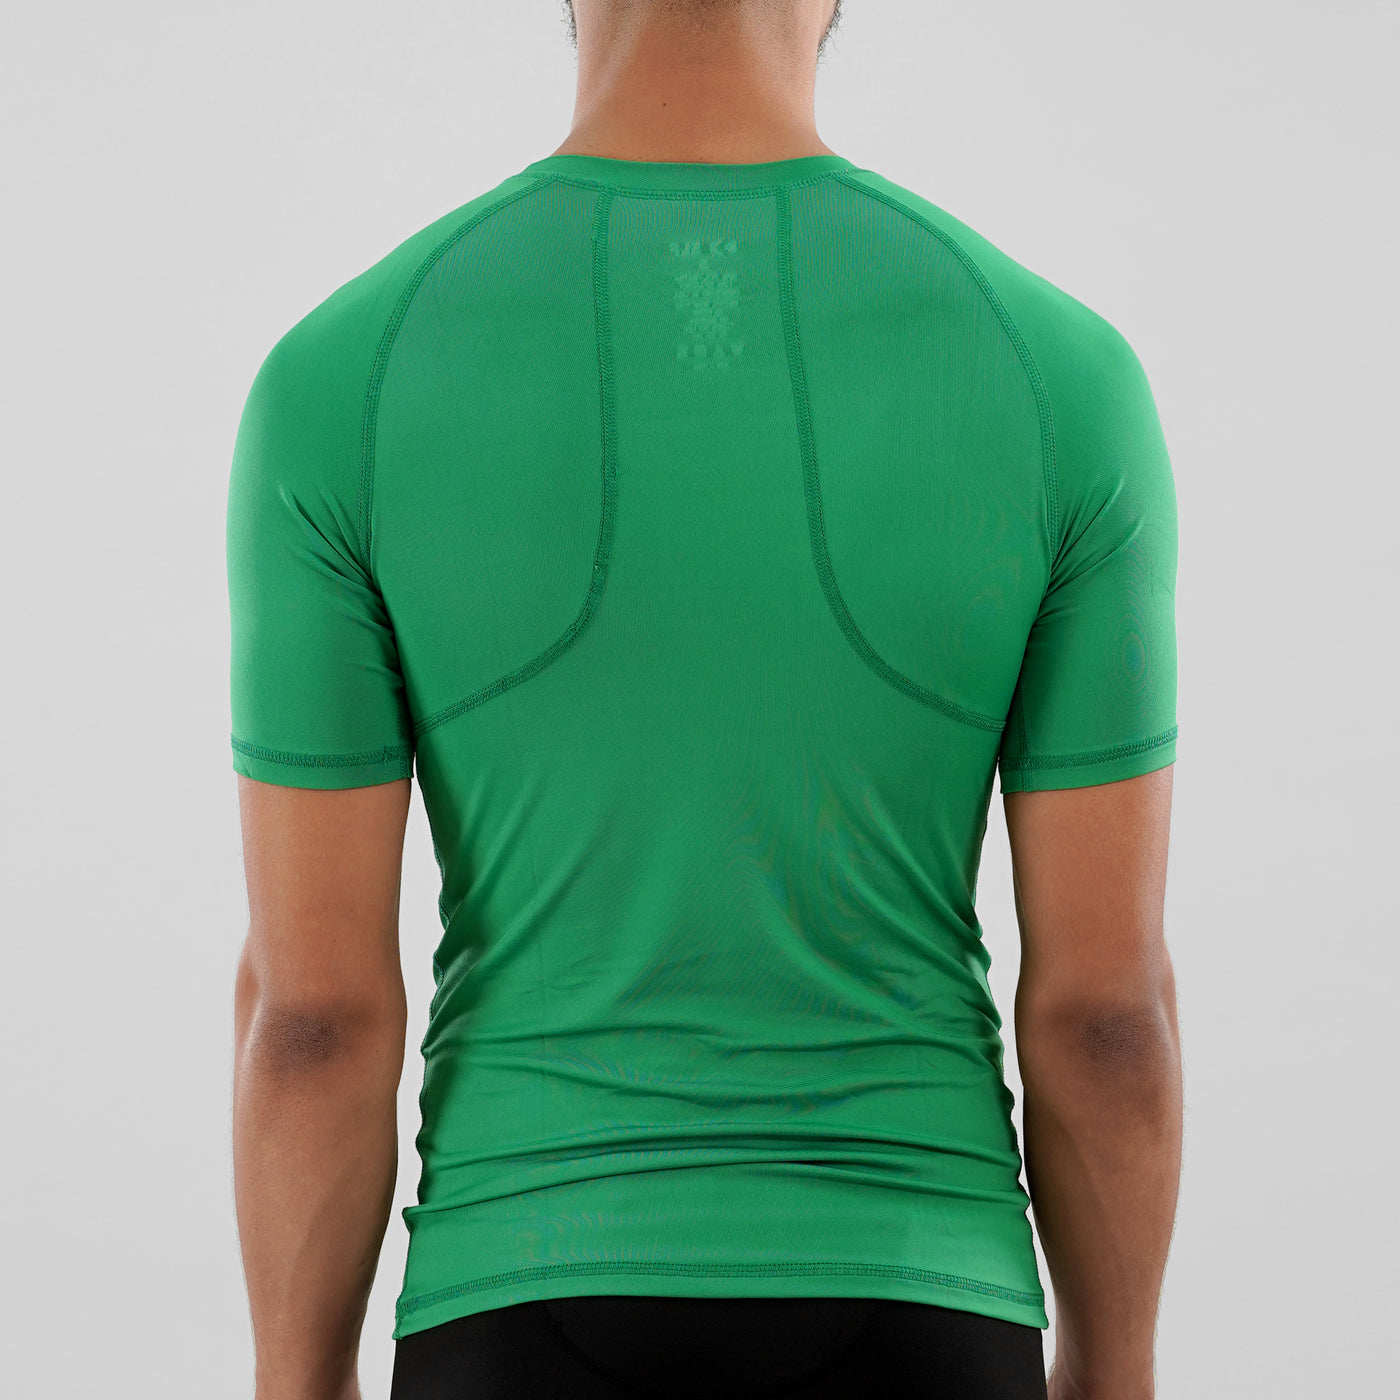 LEORÊVER Mens Performance Sleeveless Compression Shirt Fir Green / Large